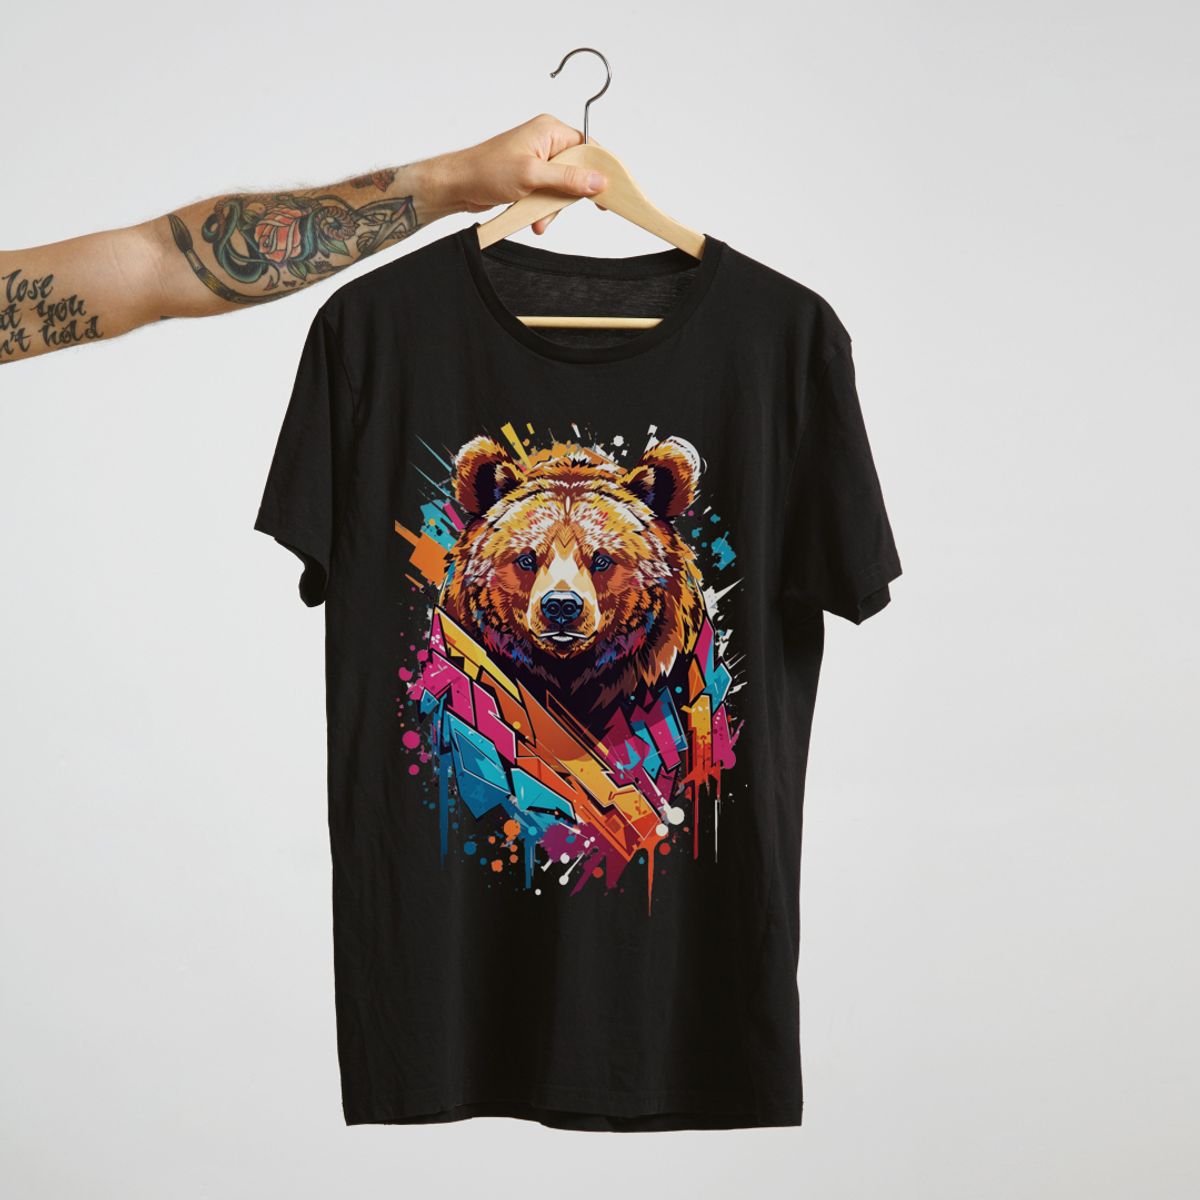 Nome do produto: Camiseta Urso Graffiti